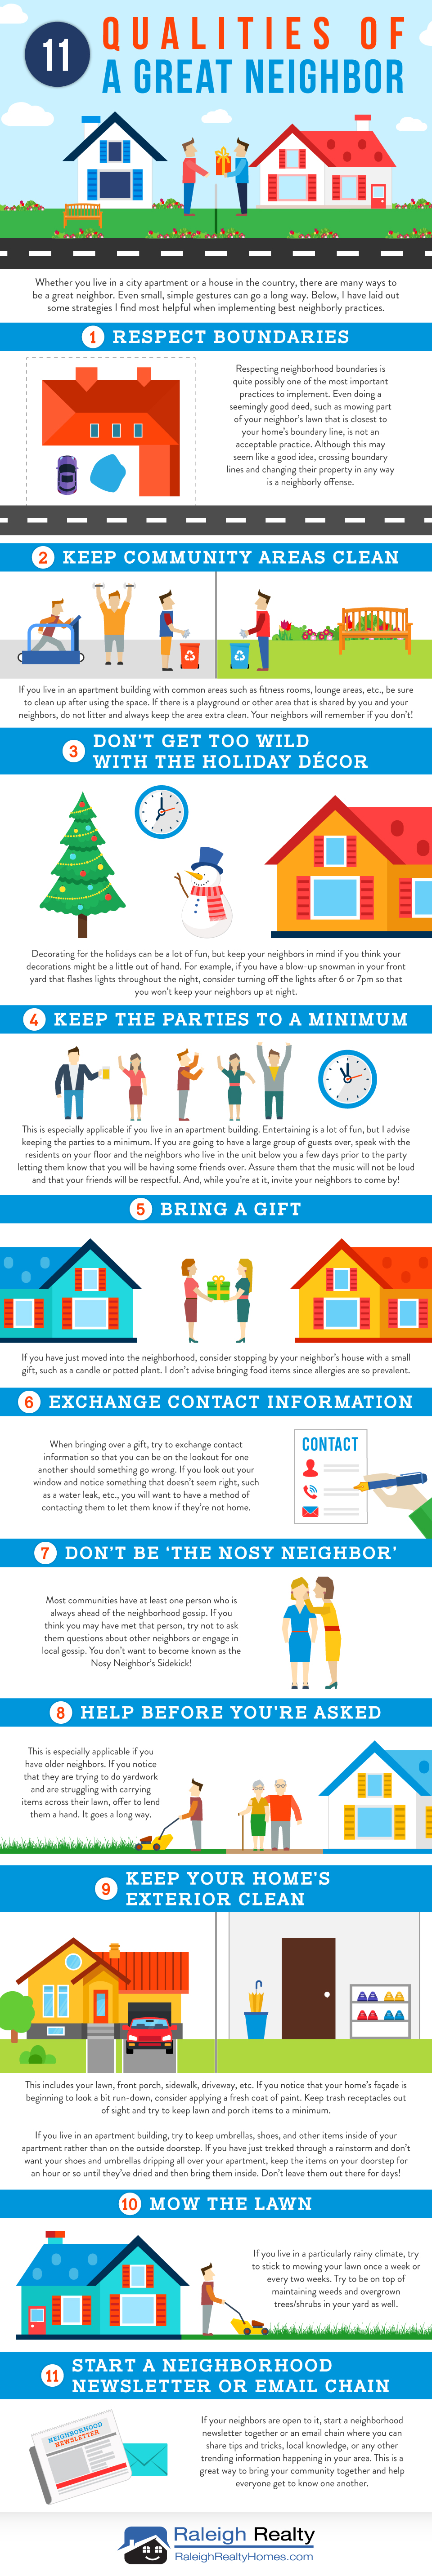 11 Qualities of a Great Neighbor - How to win over your neighborhood!